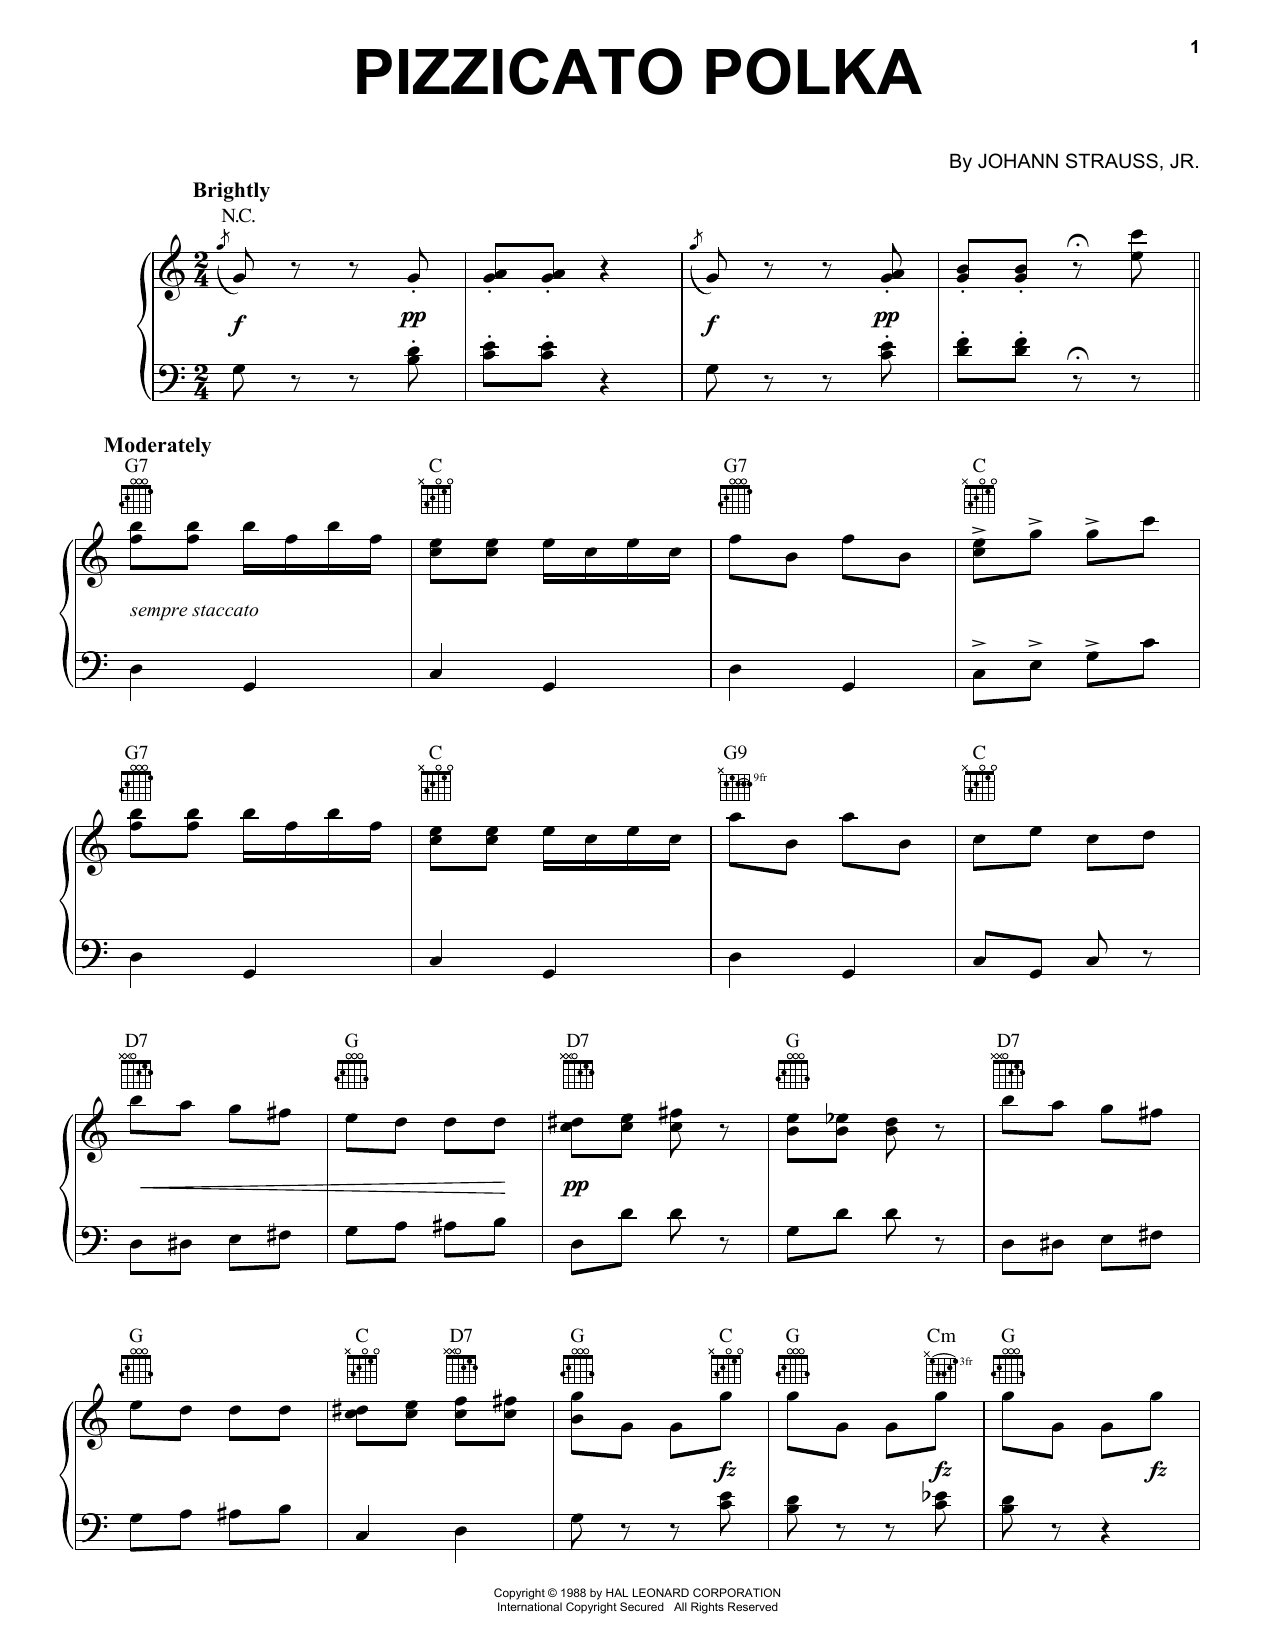 Johann Strauss, Jr. Pizzicato Polka Sheet Music Notes & Chords for Piano - Download or Print PDF